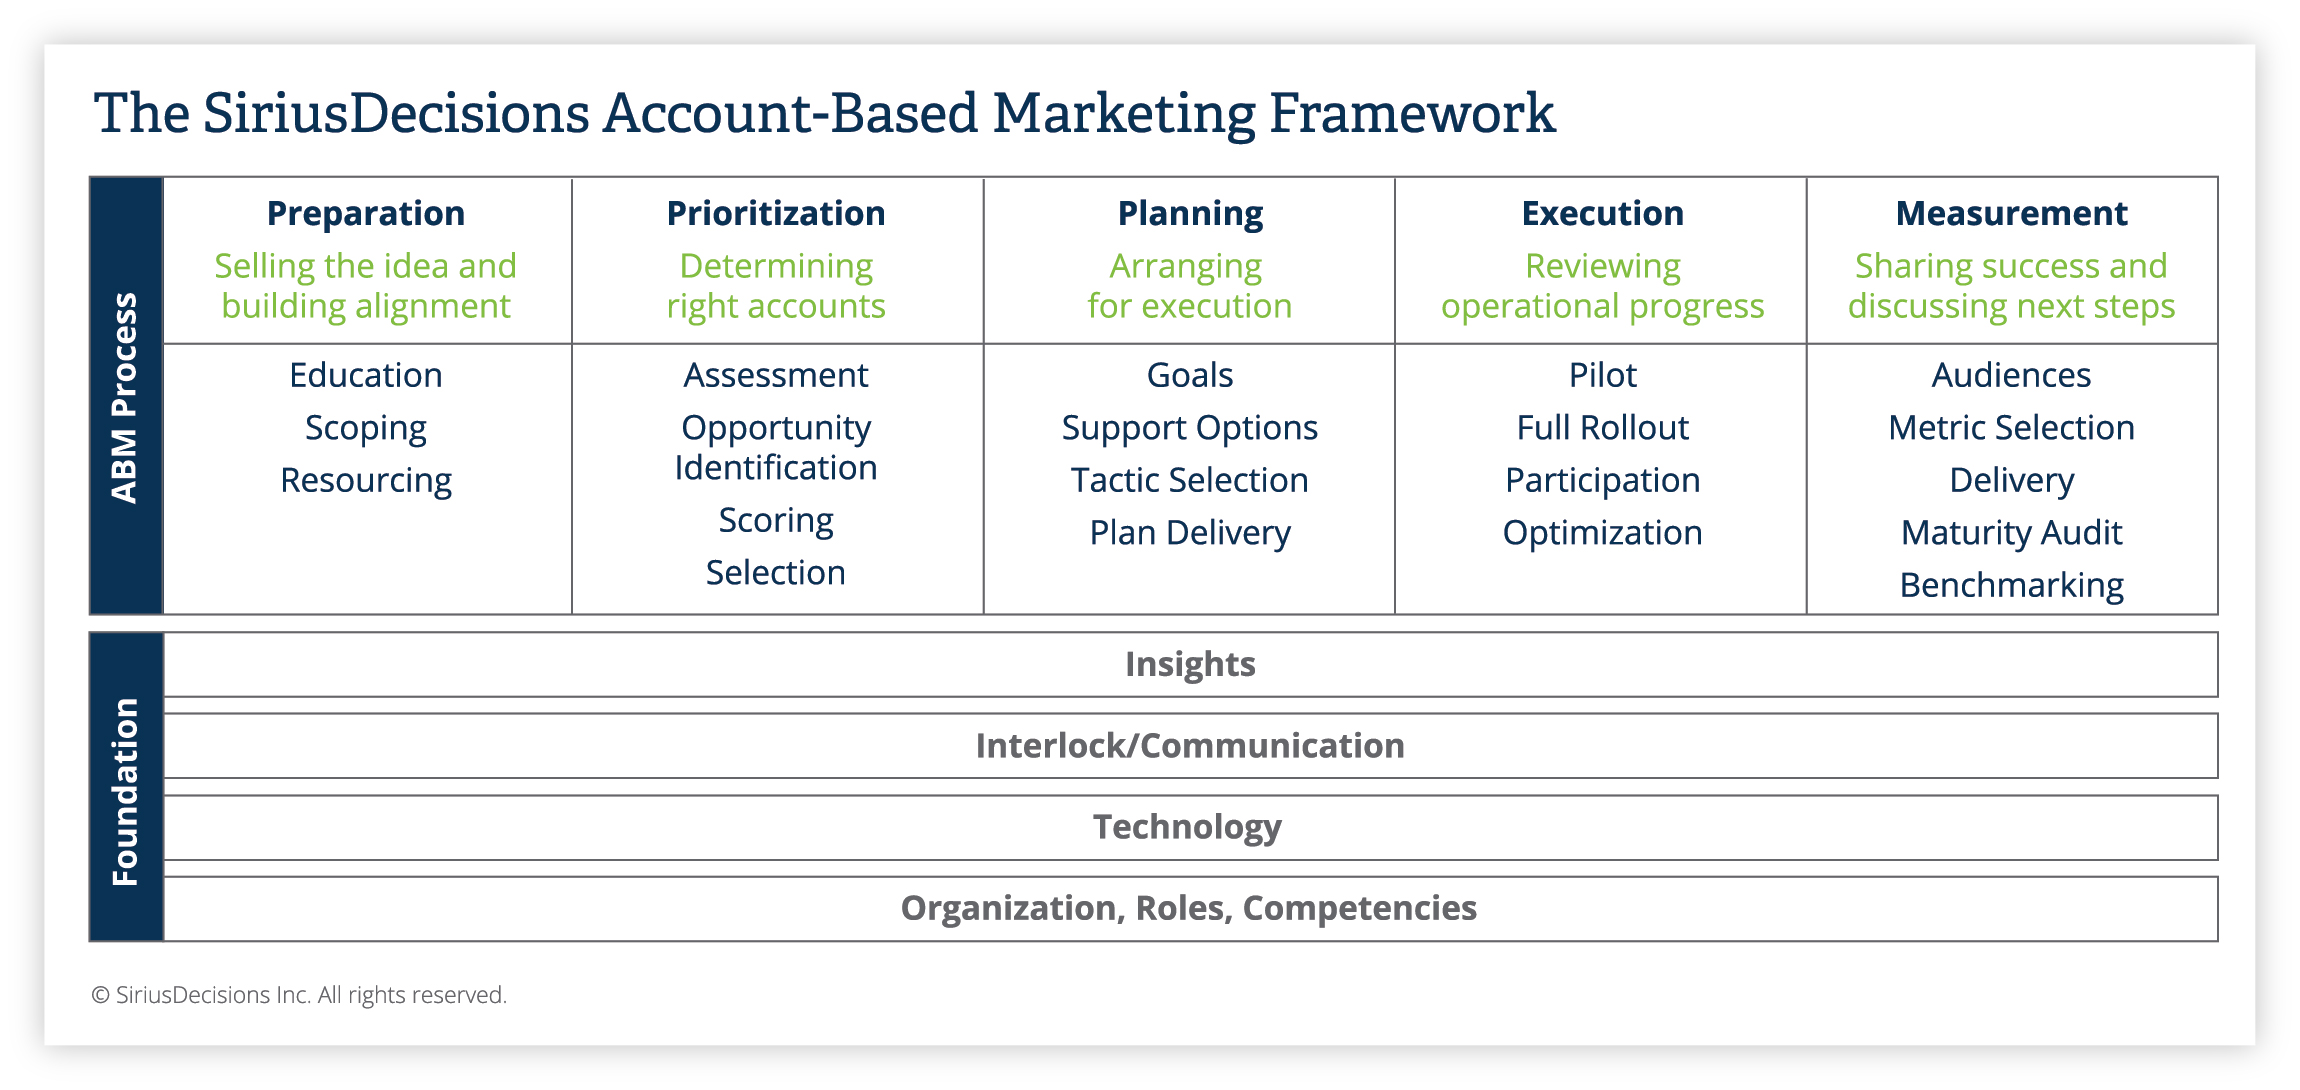 The SiriusDecisions Account-Based Marketing Framework